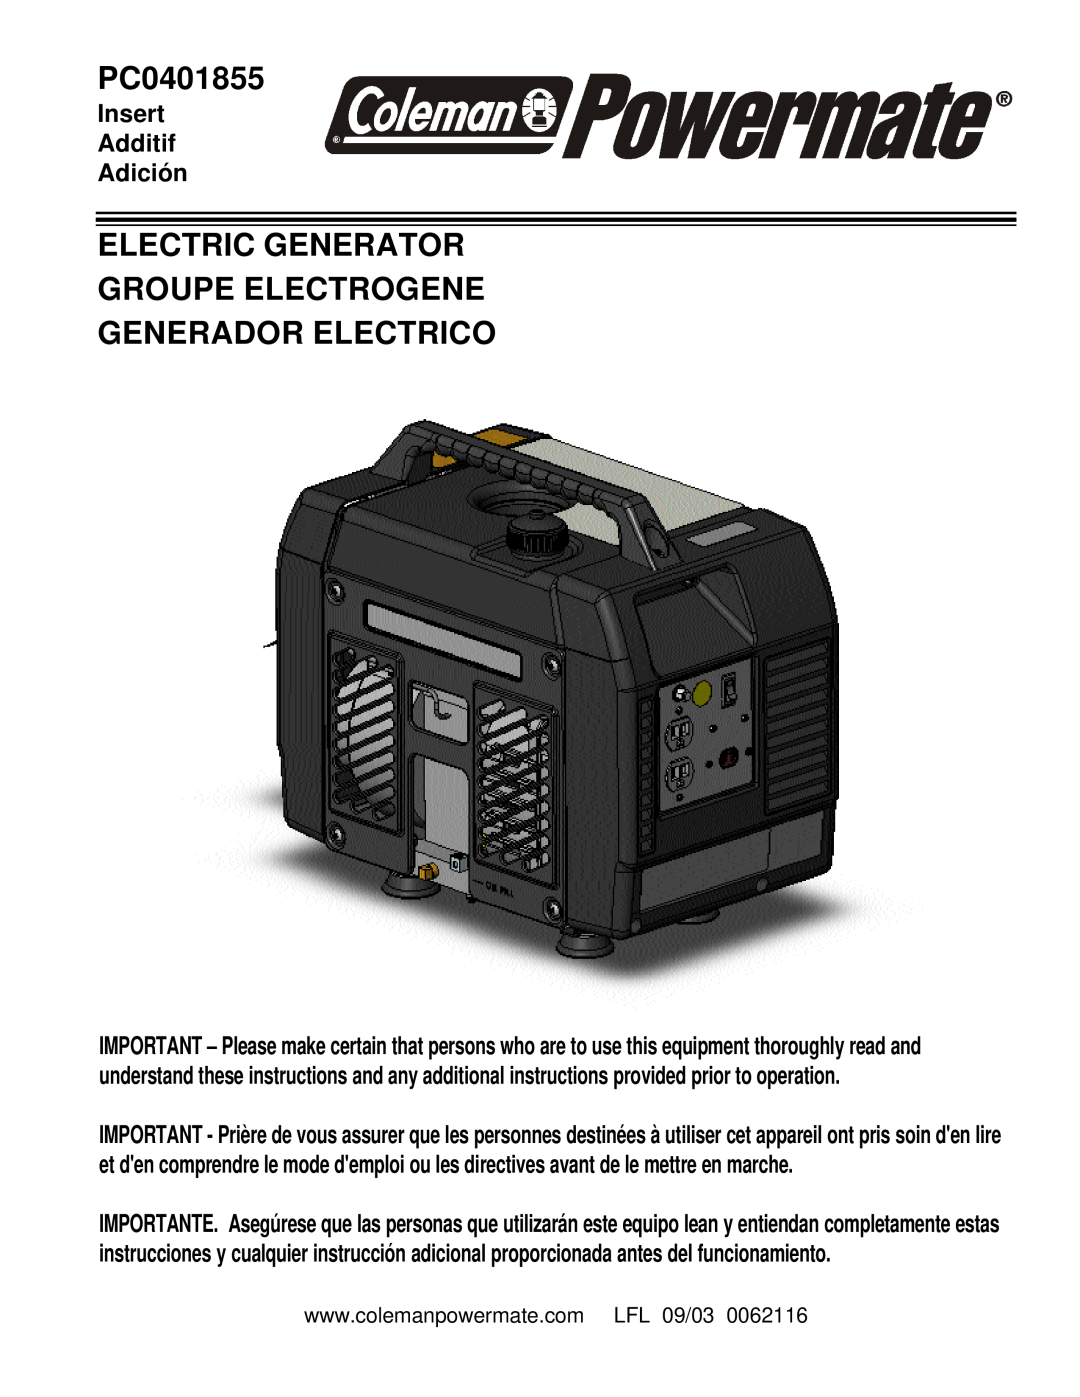 Powermate PC0401855 manual Electric Generator Groupe Electrogene, Generador Electrico, Insert Additif Adición 